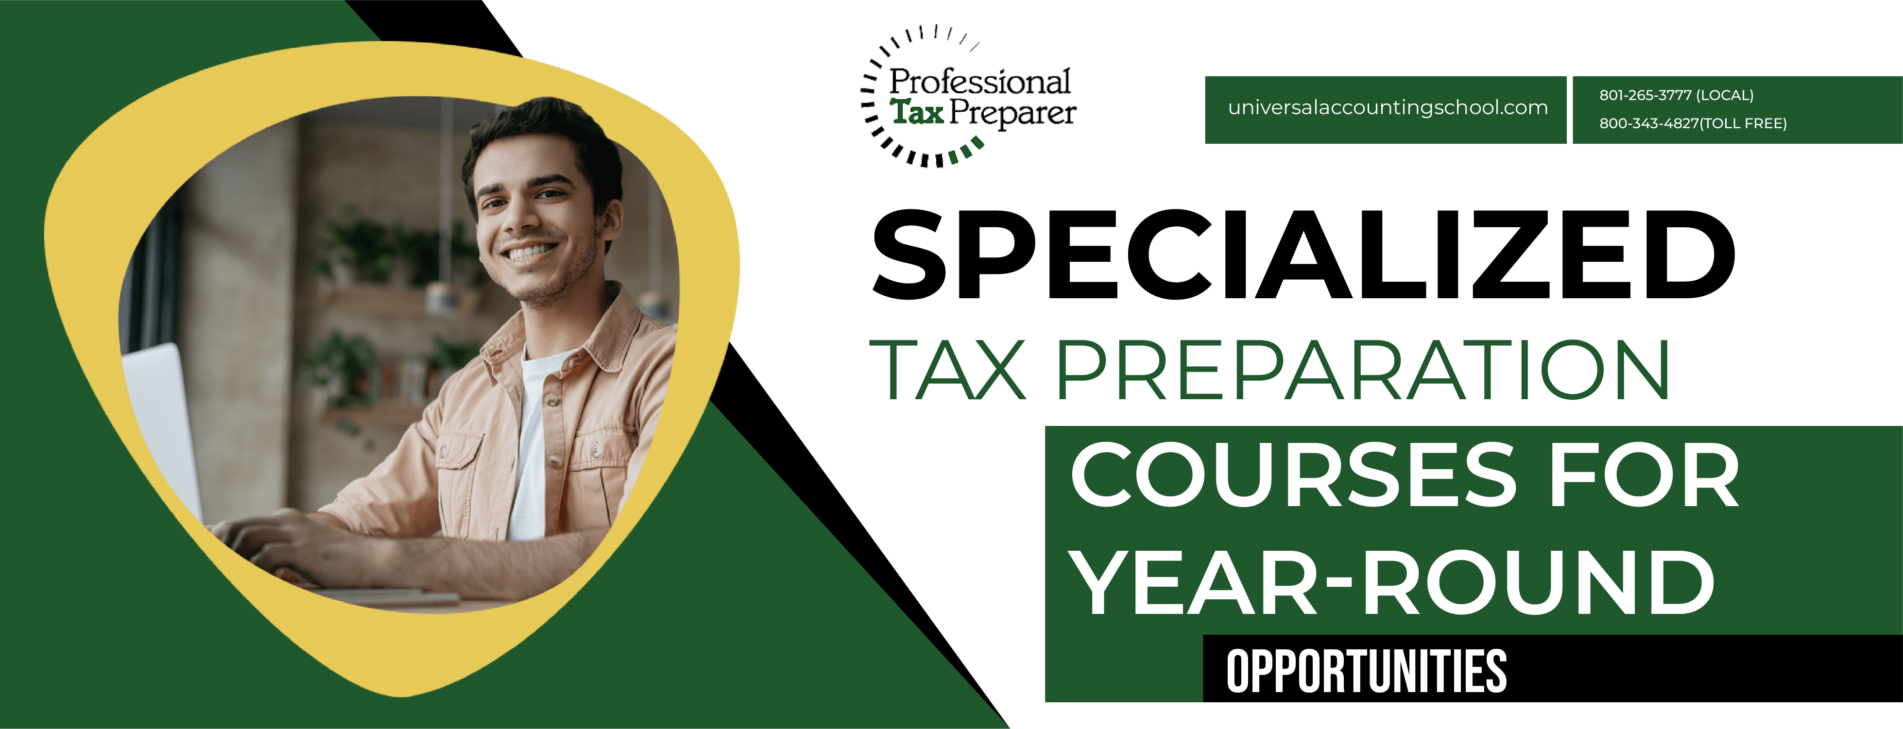 Tax Preparation Courses